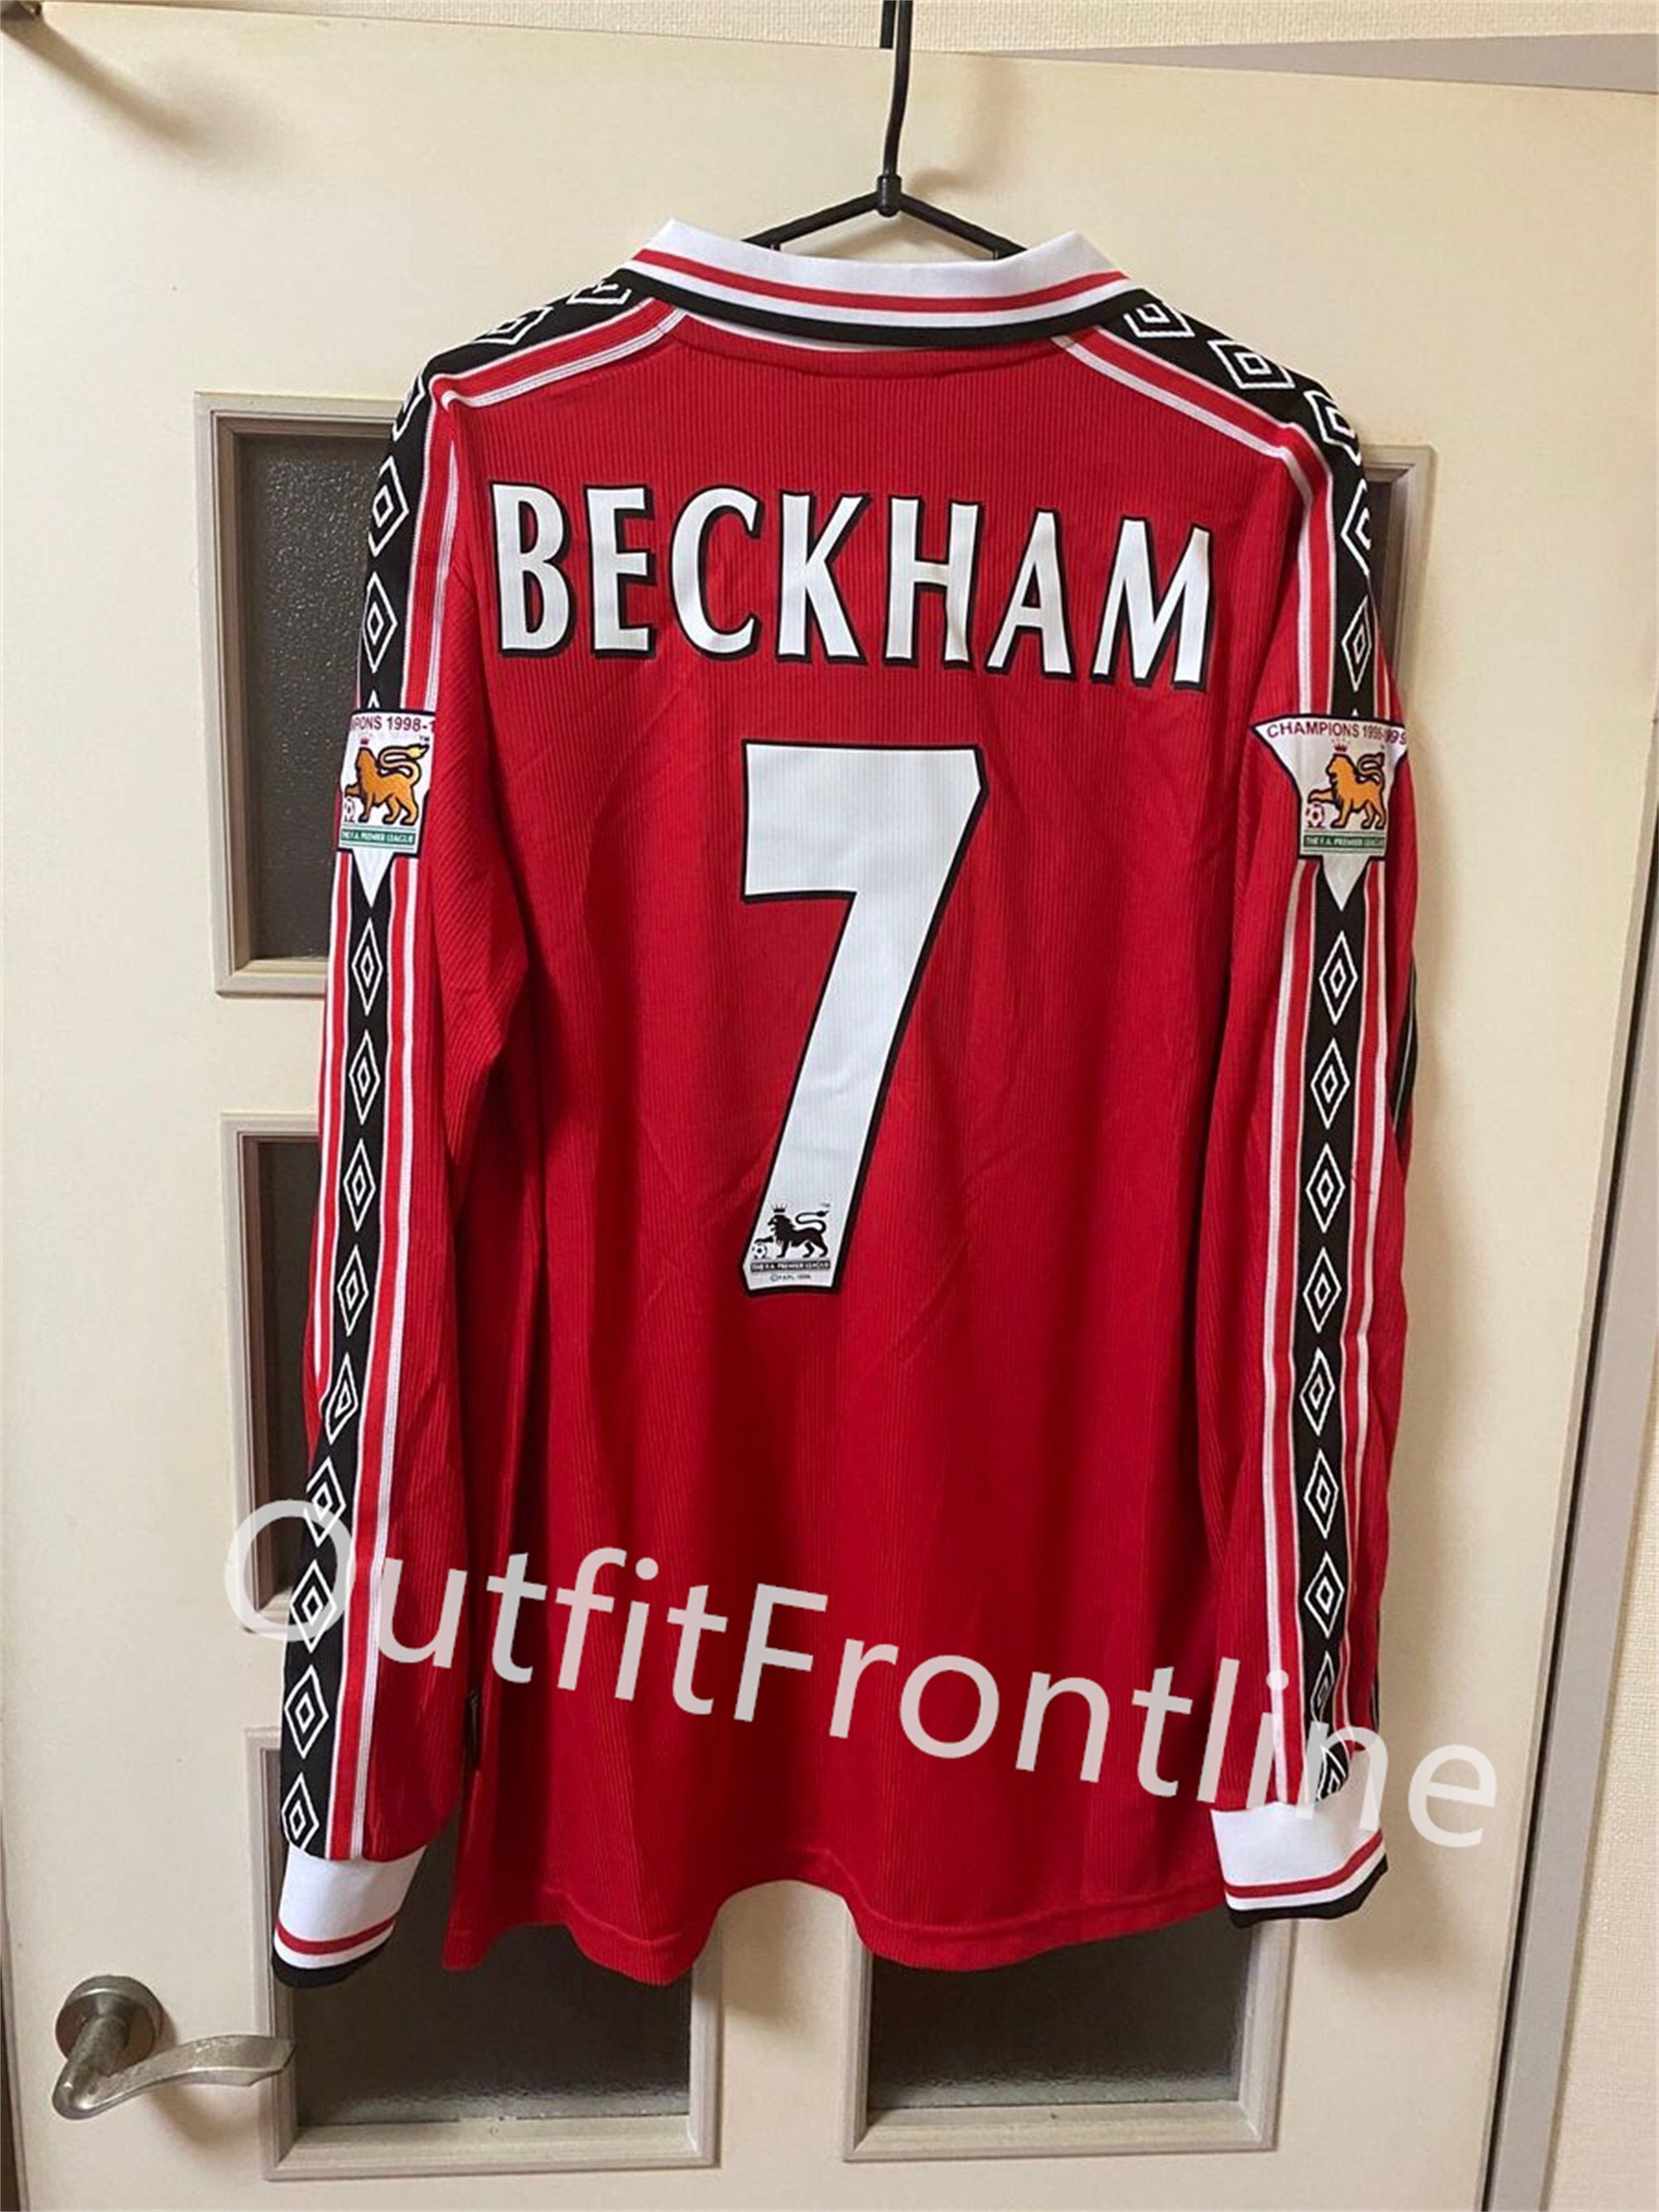 Vintage David Beckham #7 Manchester United 98/99 Red Short Sleeve Retro  Jersey